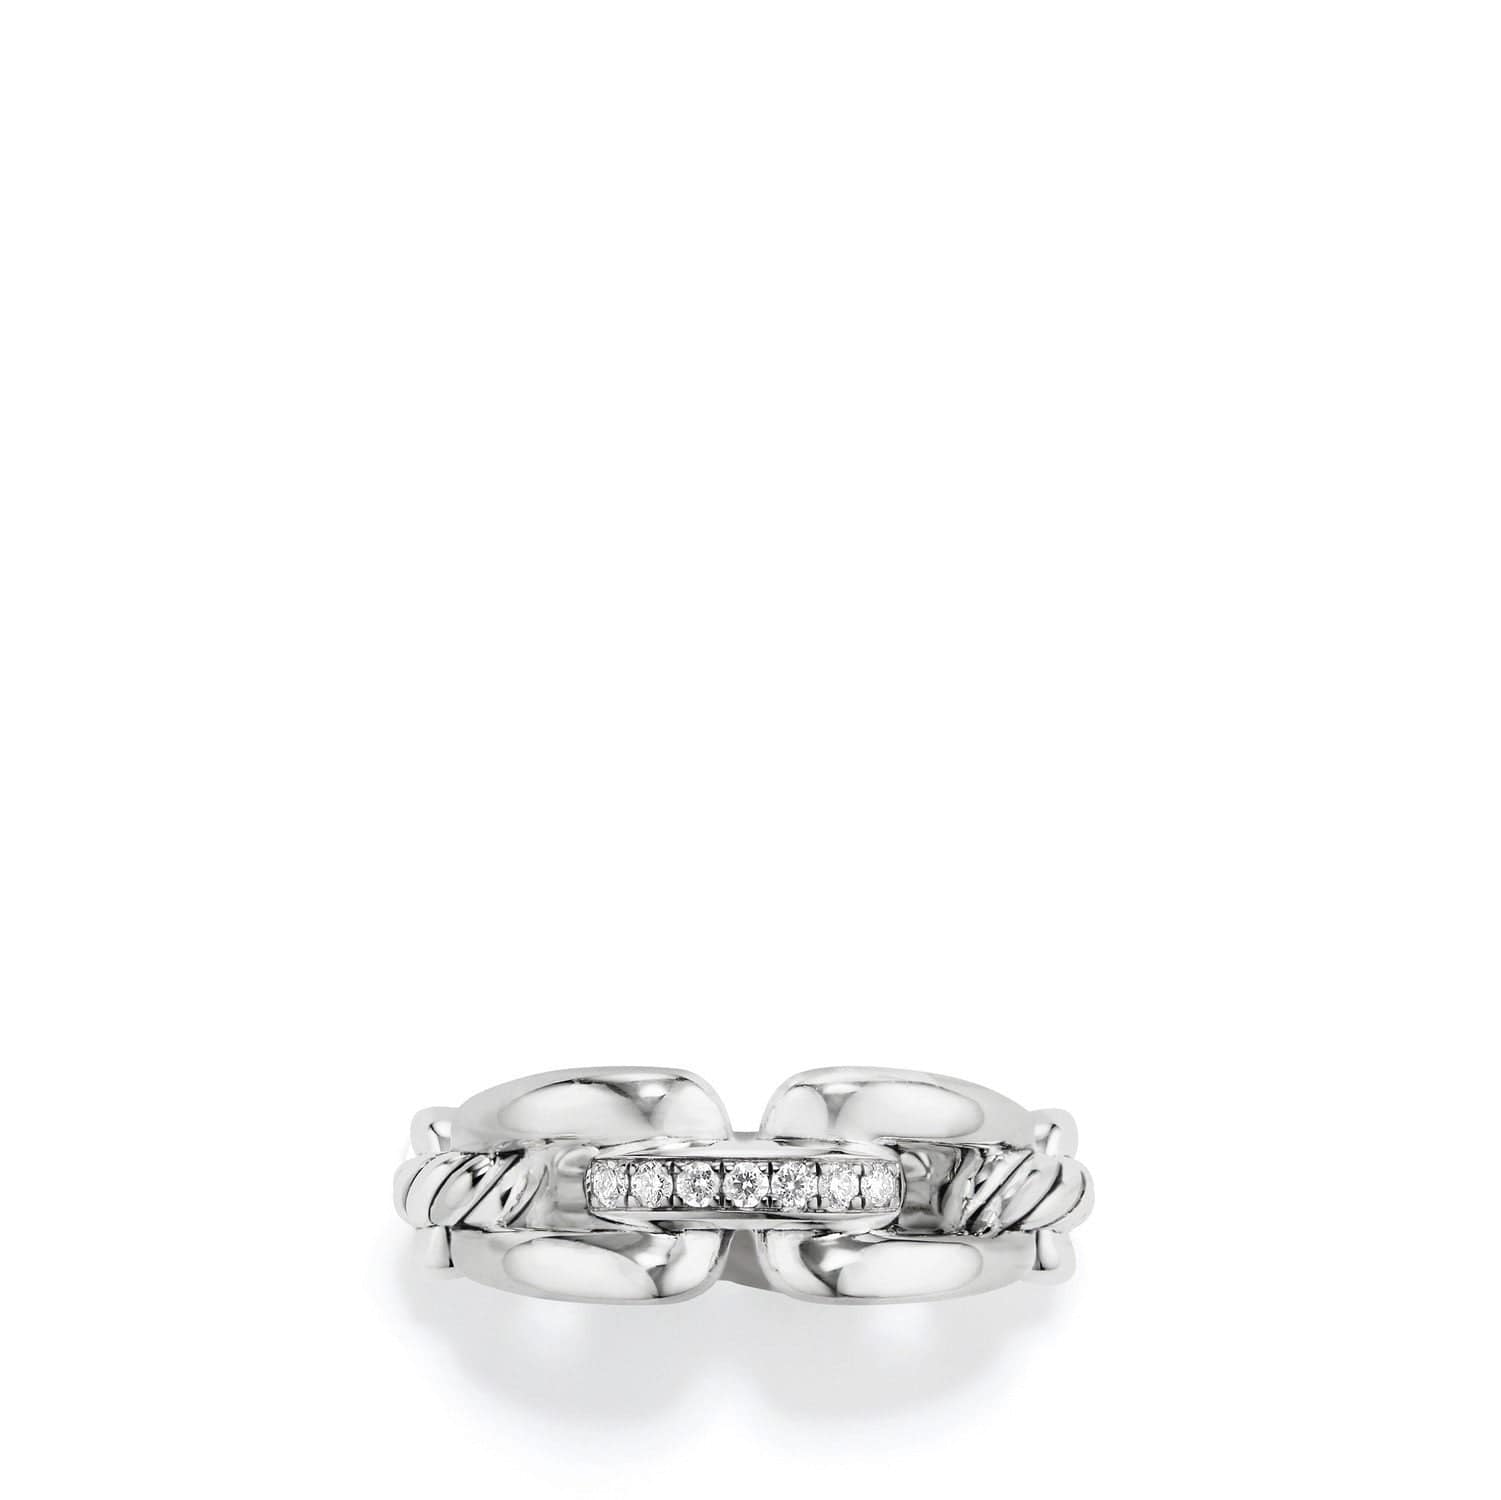 Wellesley Link Chain Ring with Diamonds